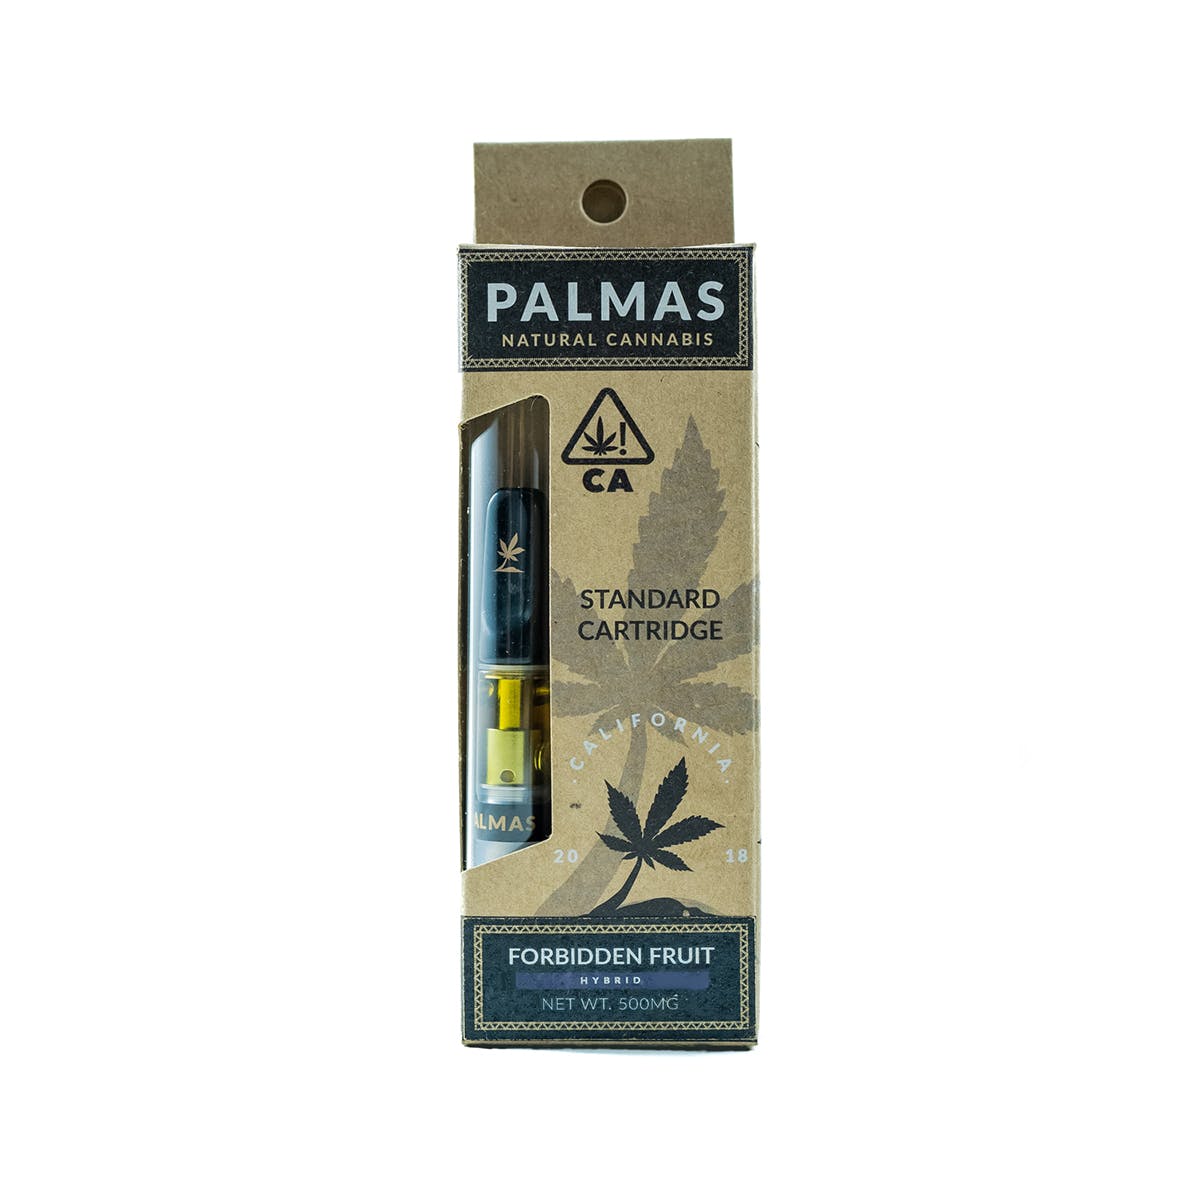 Palmas Standard Cartridge - Forbidden Fruit